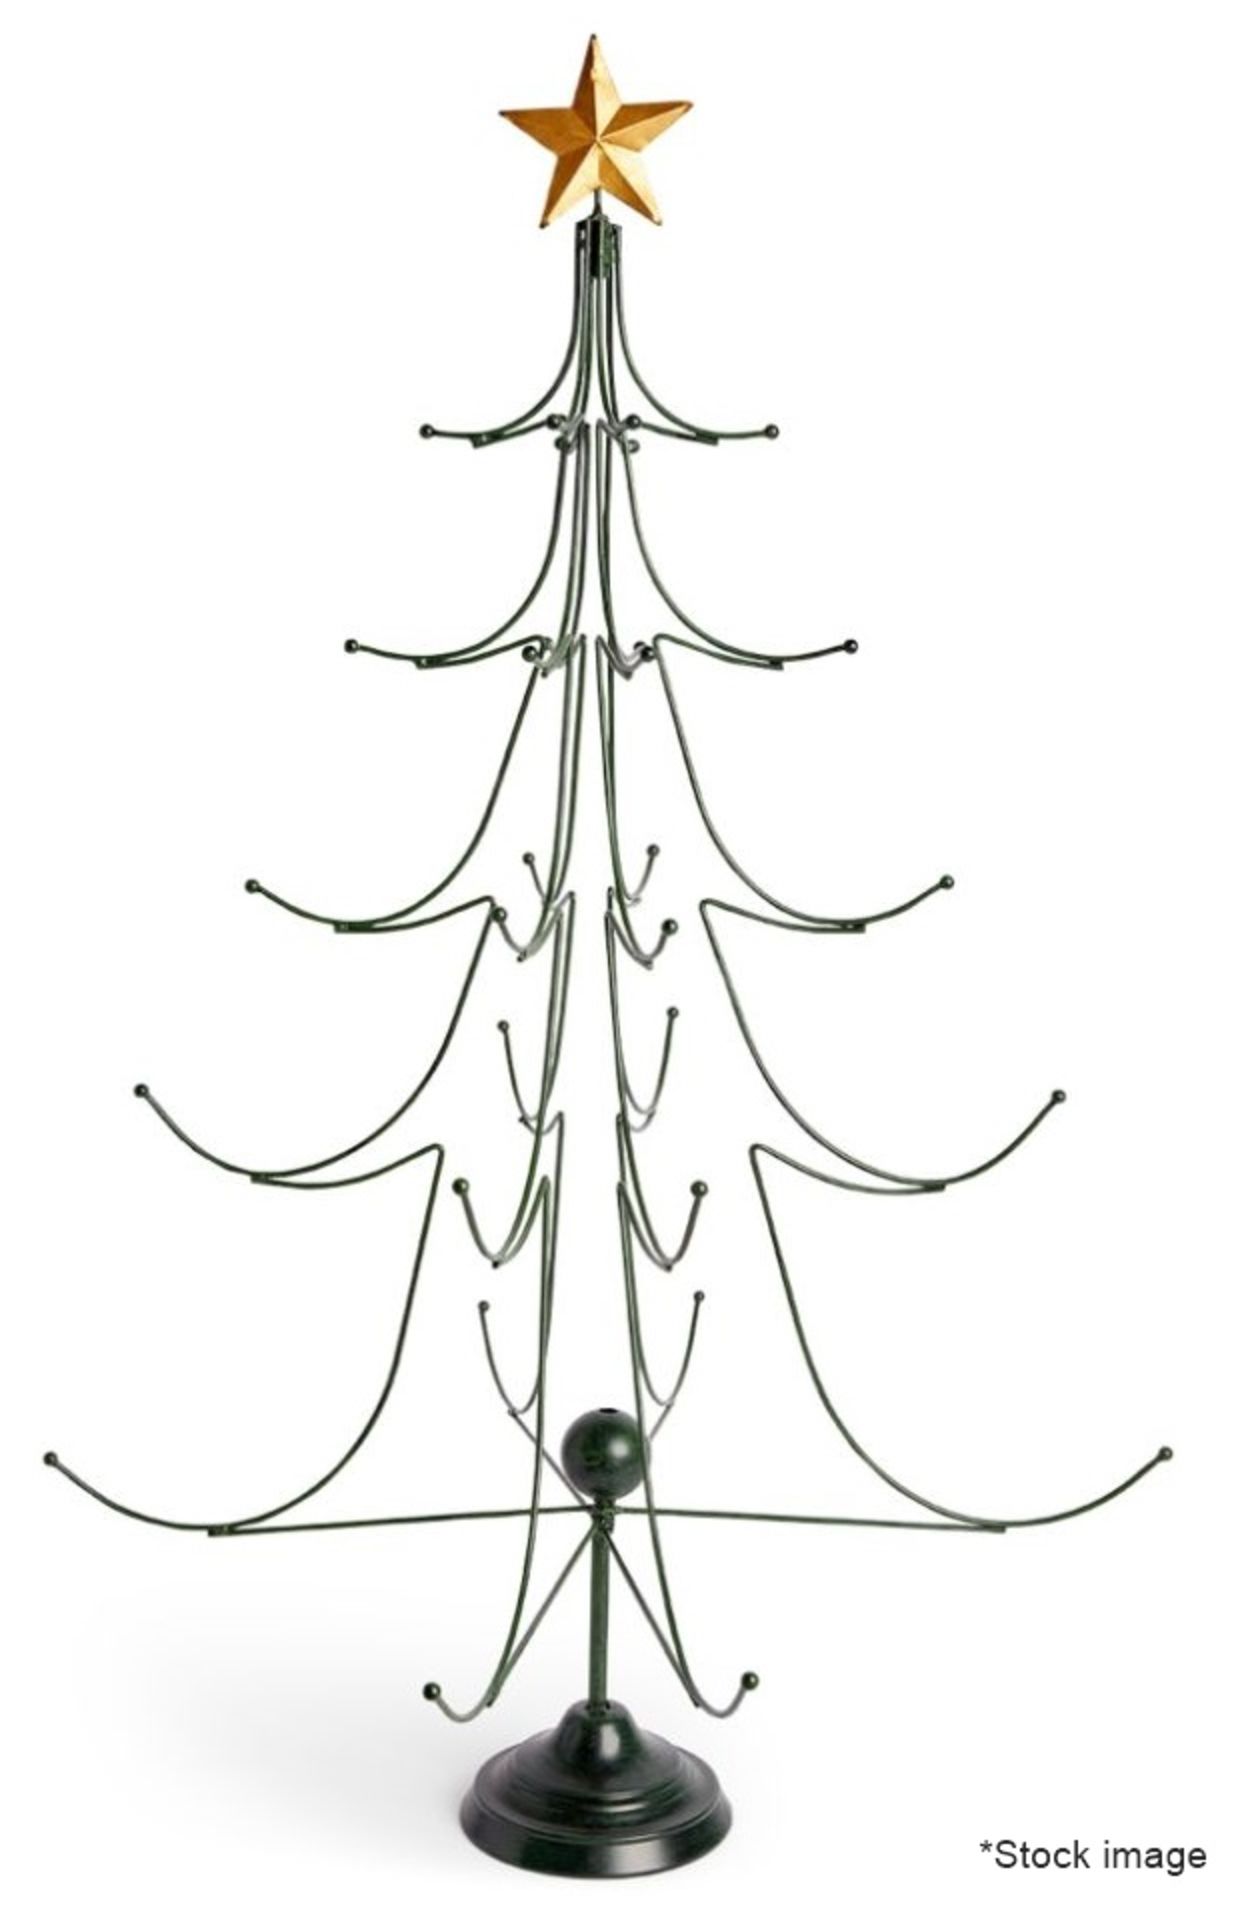 1 x SHISHI Decorative Star-topped Metal Christmas Tree (94cm) - Original Price £145.00 - Unboxed